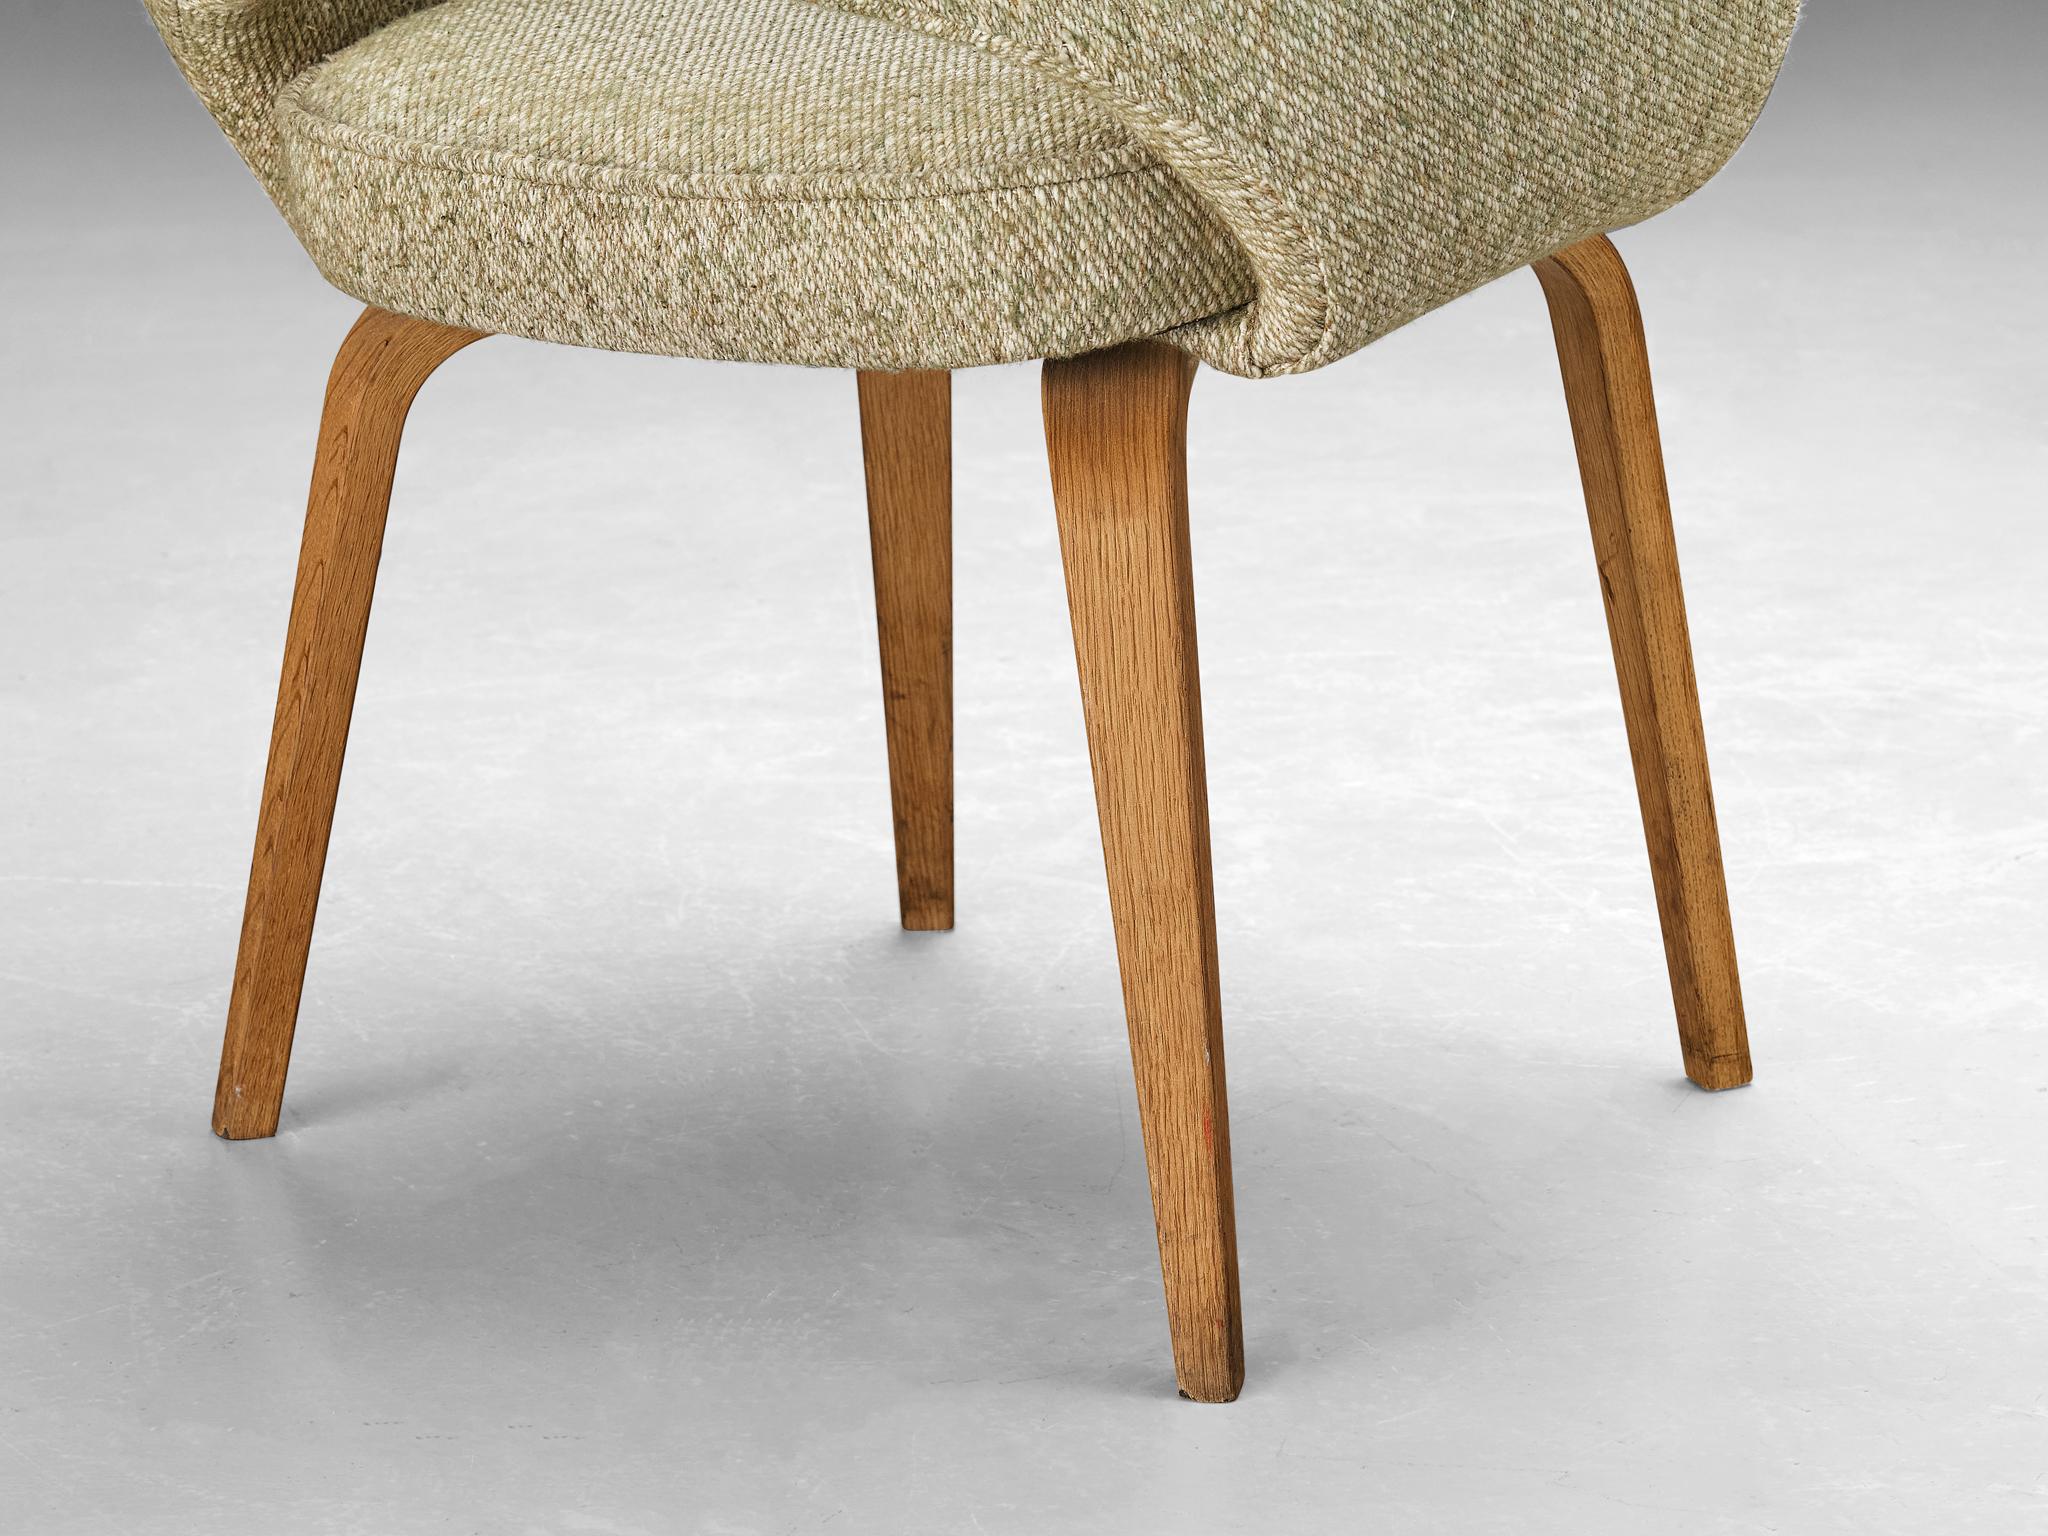 Eero Saarinen for Knoll 'Executive' Armchair in Beige Creme Fabric and Oak